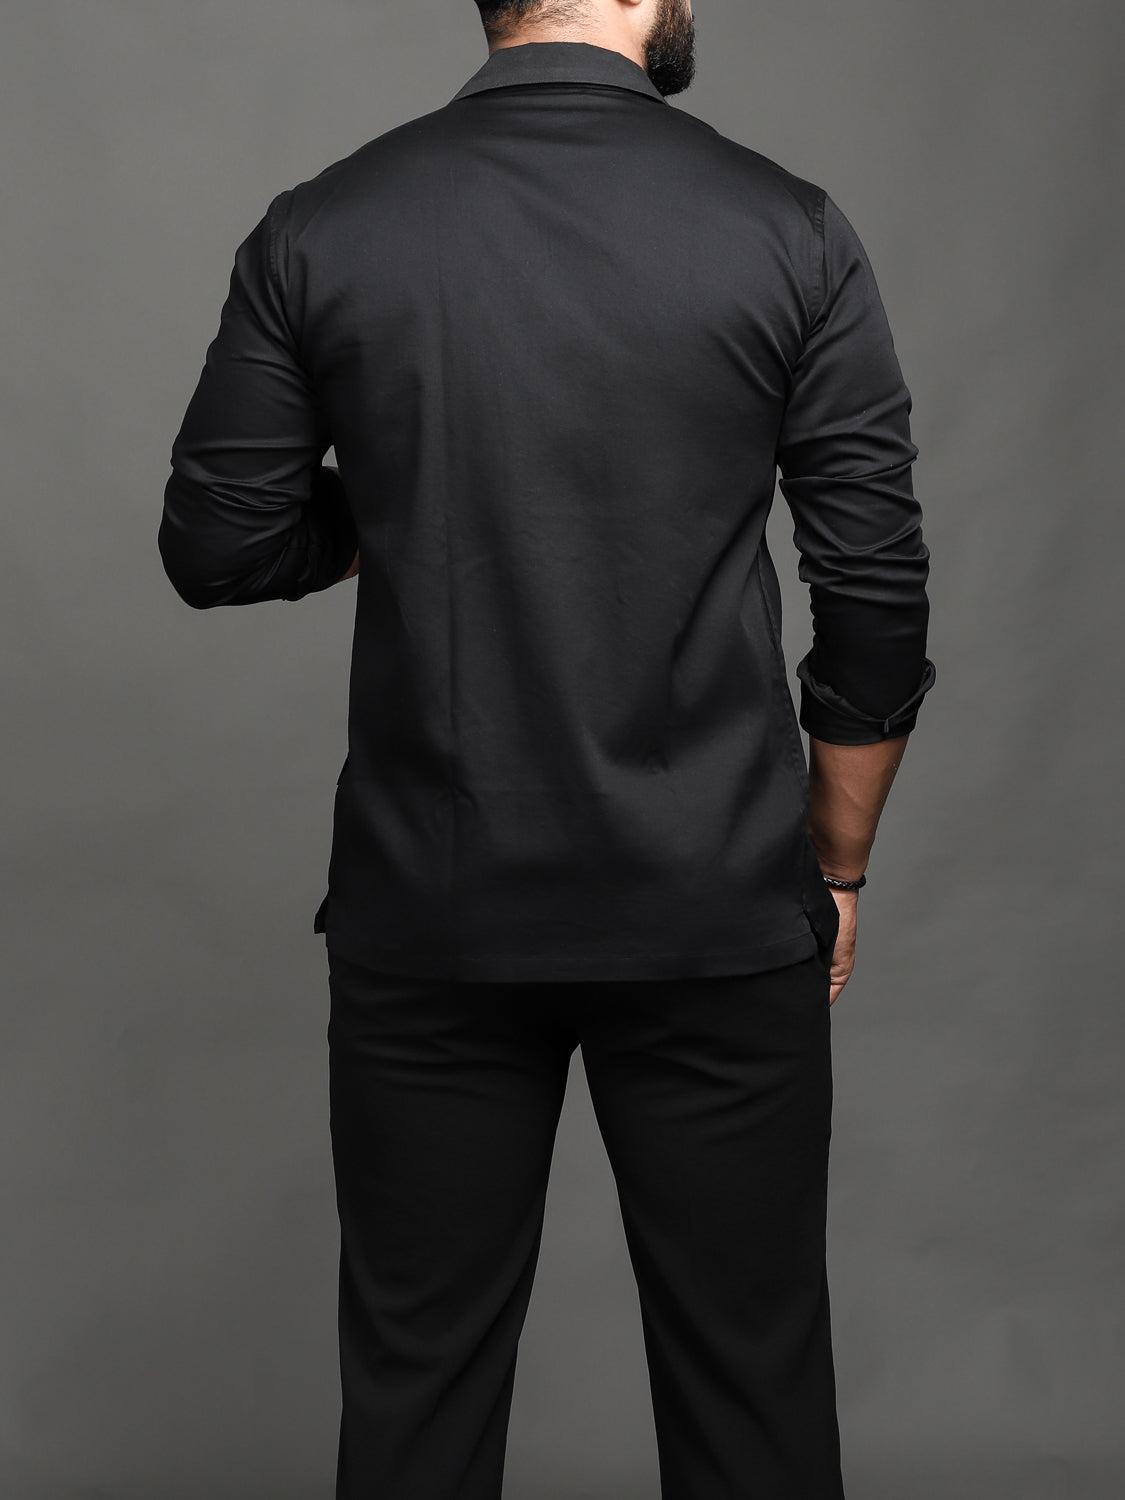 Topstitch Black Shirt (Designer Collection) - CESARI LONDON